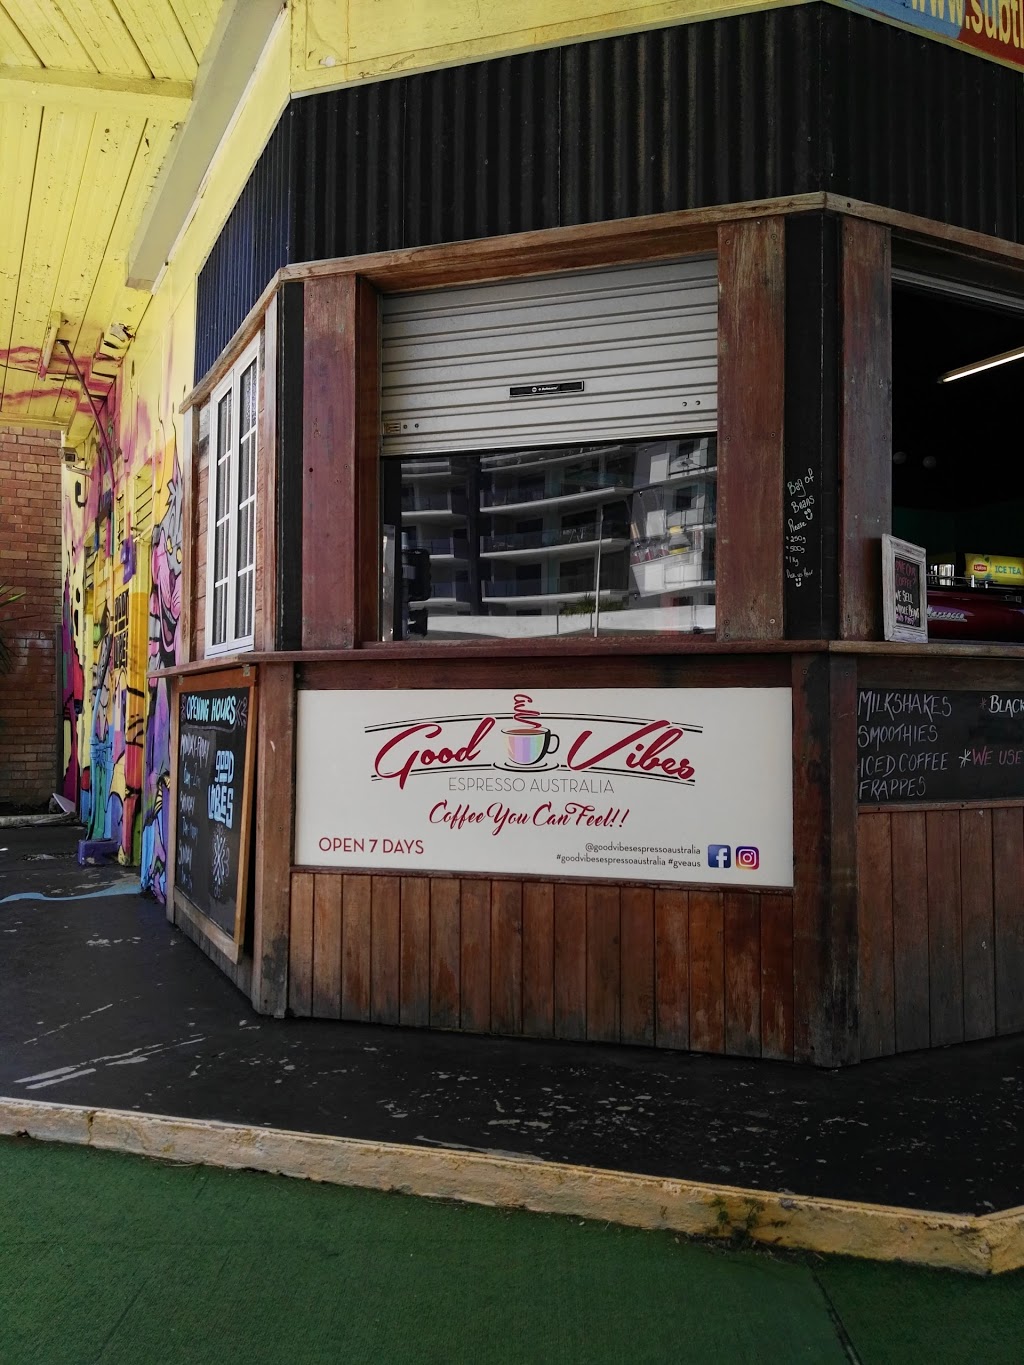 Good Vibes Espresso Australia | cafe | 1-13 Redcliffe Parade, (Corner Anzac Rd and Sutton Street), Redcliffe QLD 4020, Australia